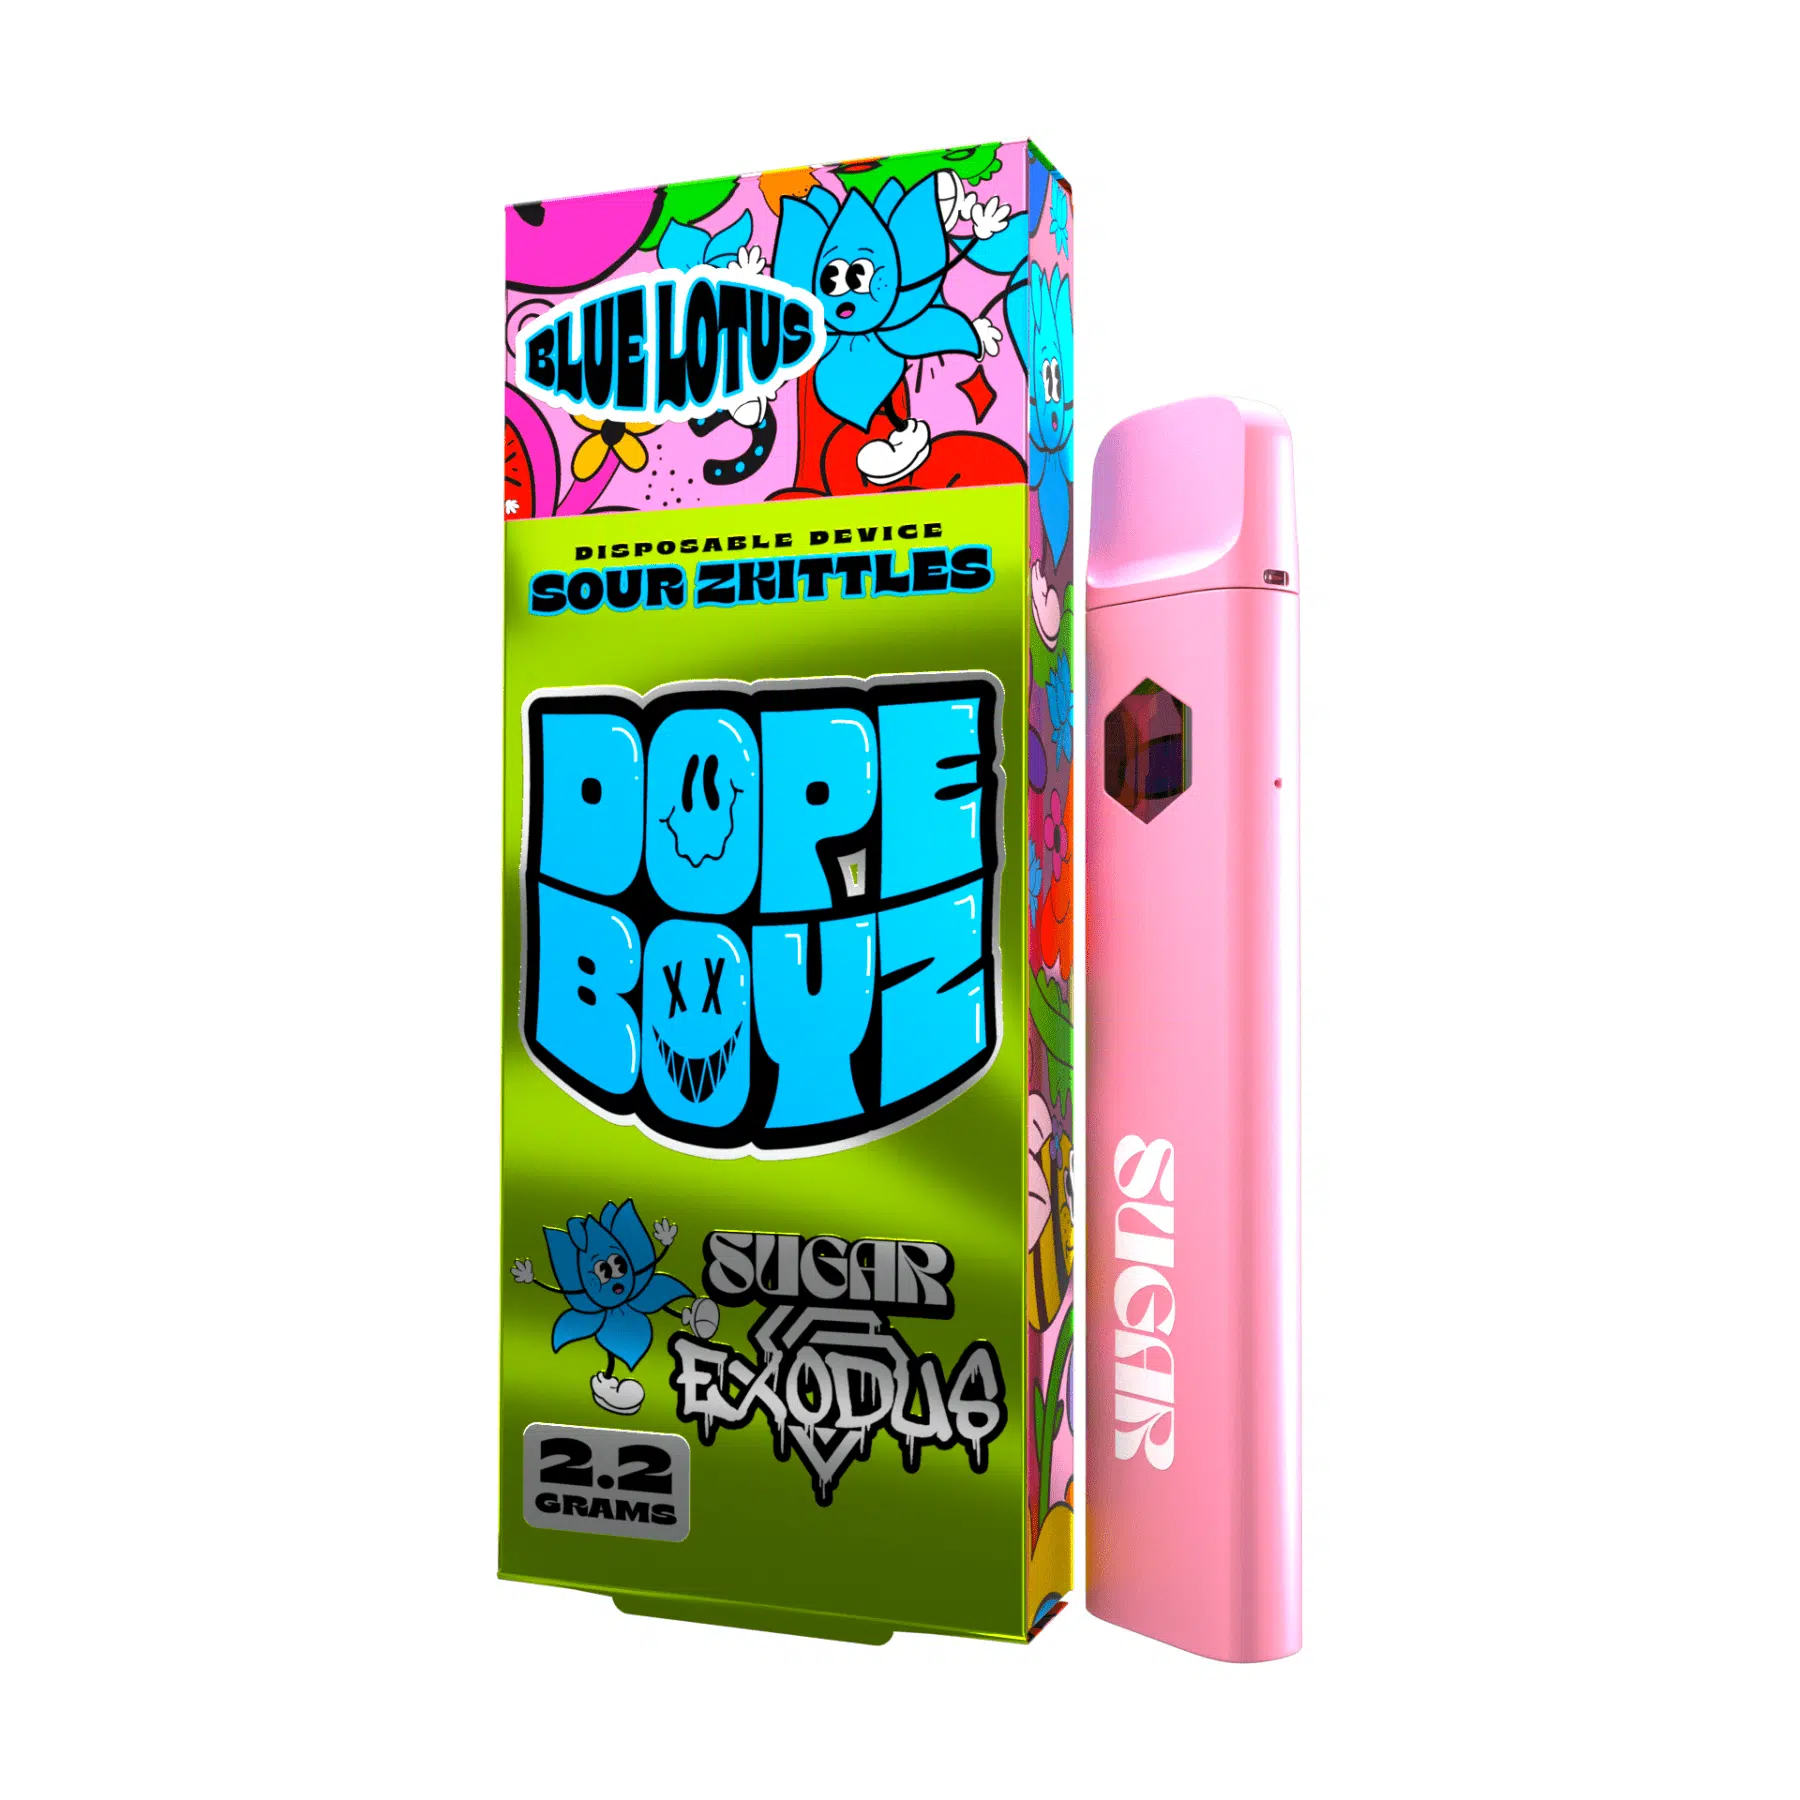 A pink box with a pink sugar exodus dope boyz blue lotus disposables (2. 2g) e-liquid.